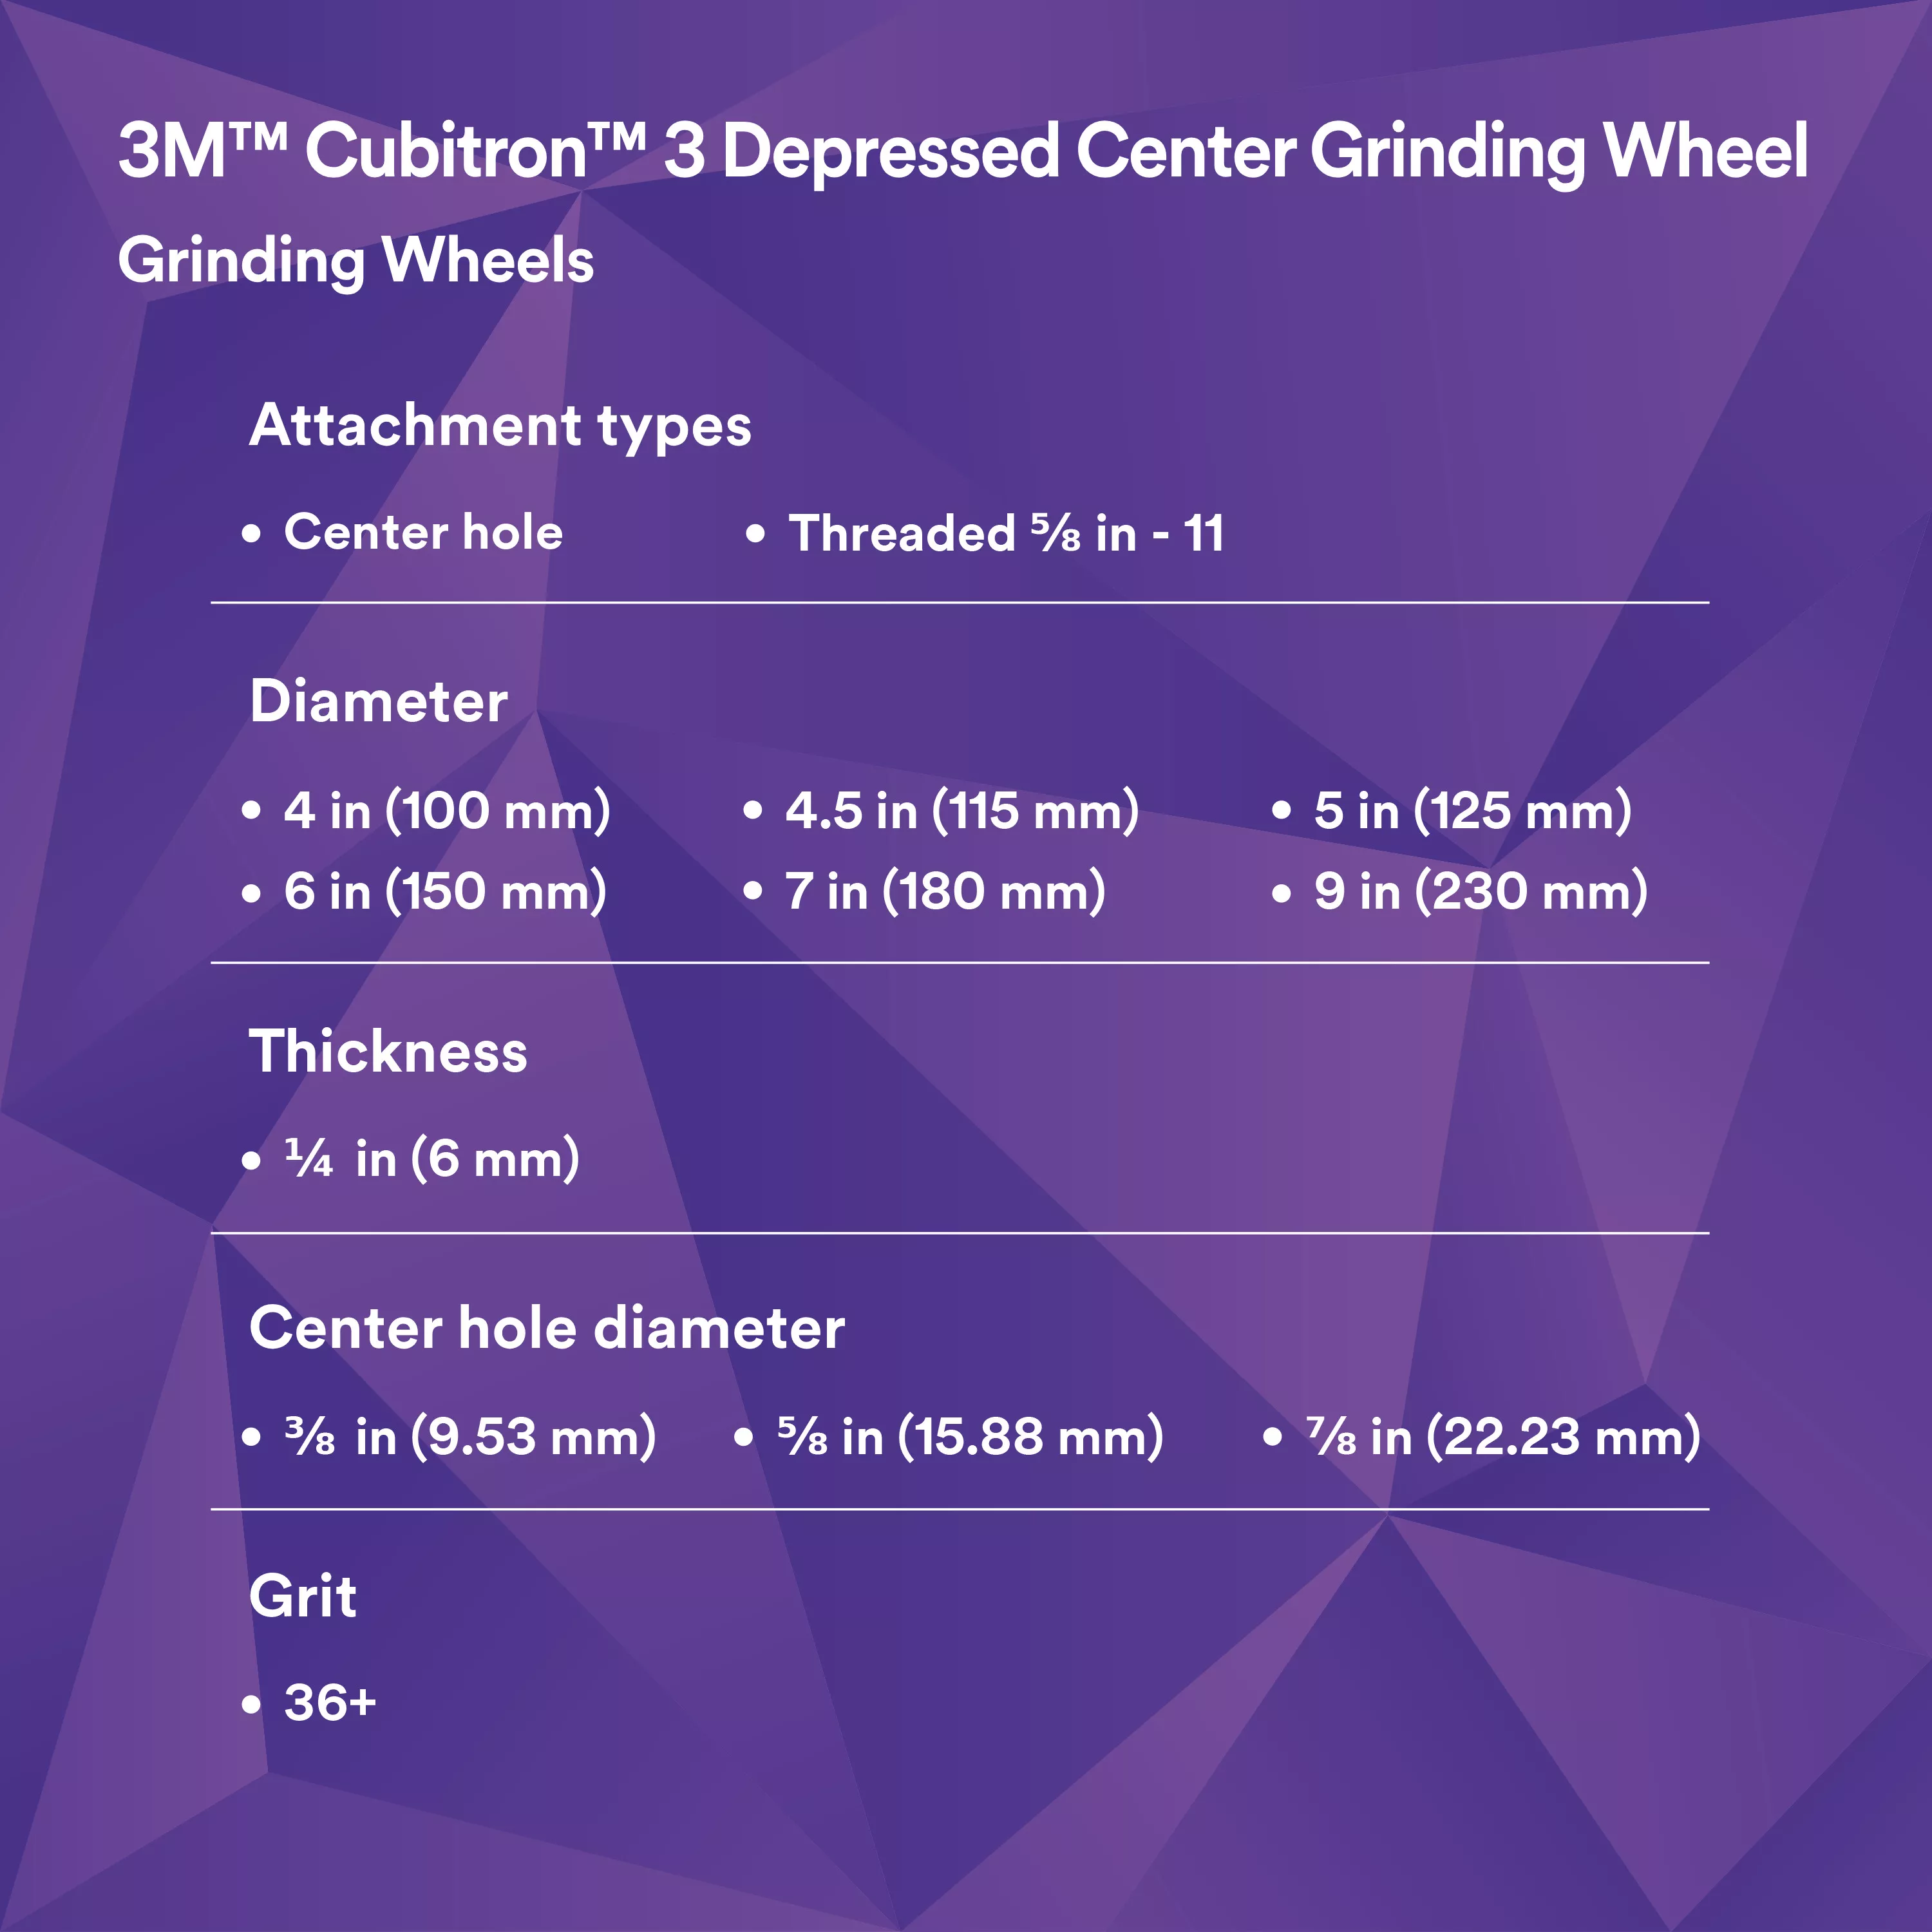 SKU 7100317727 | 3M™ Cubitron™ 3 Depressed Center Grinding Wheel